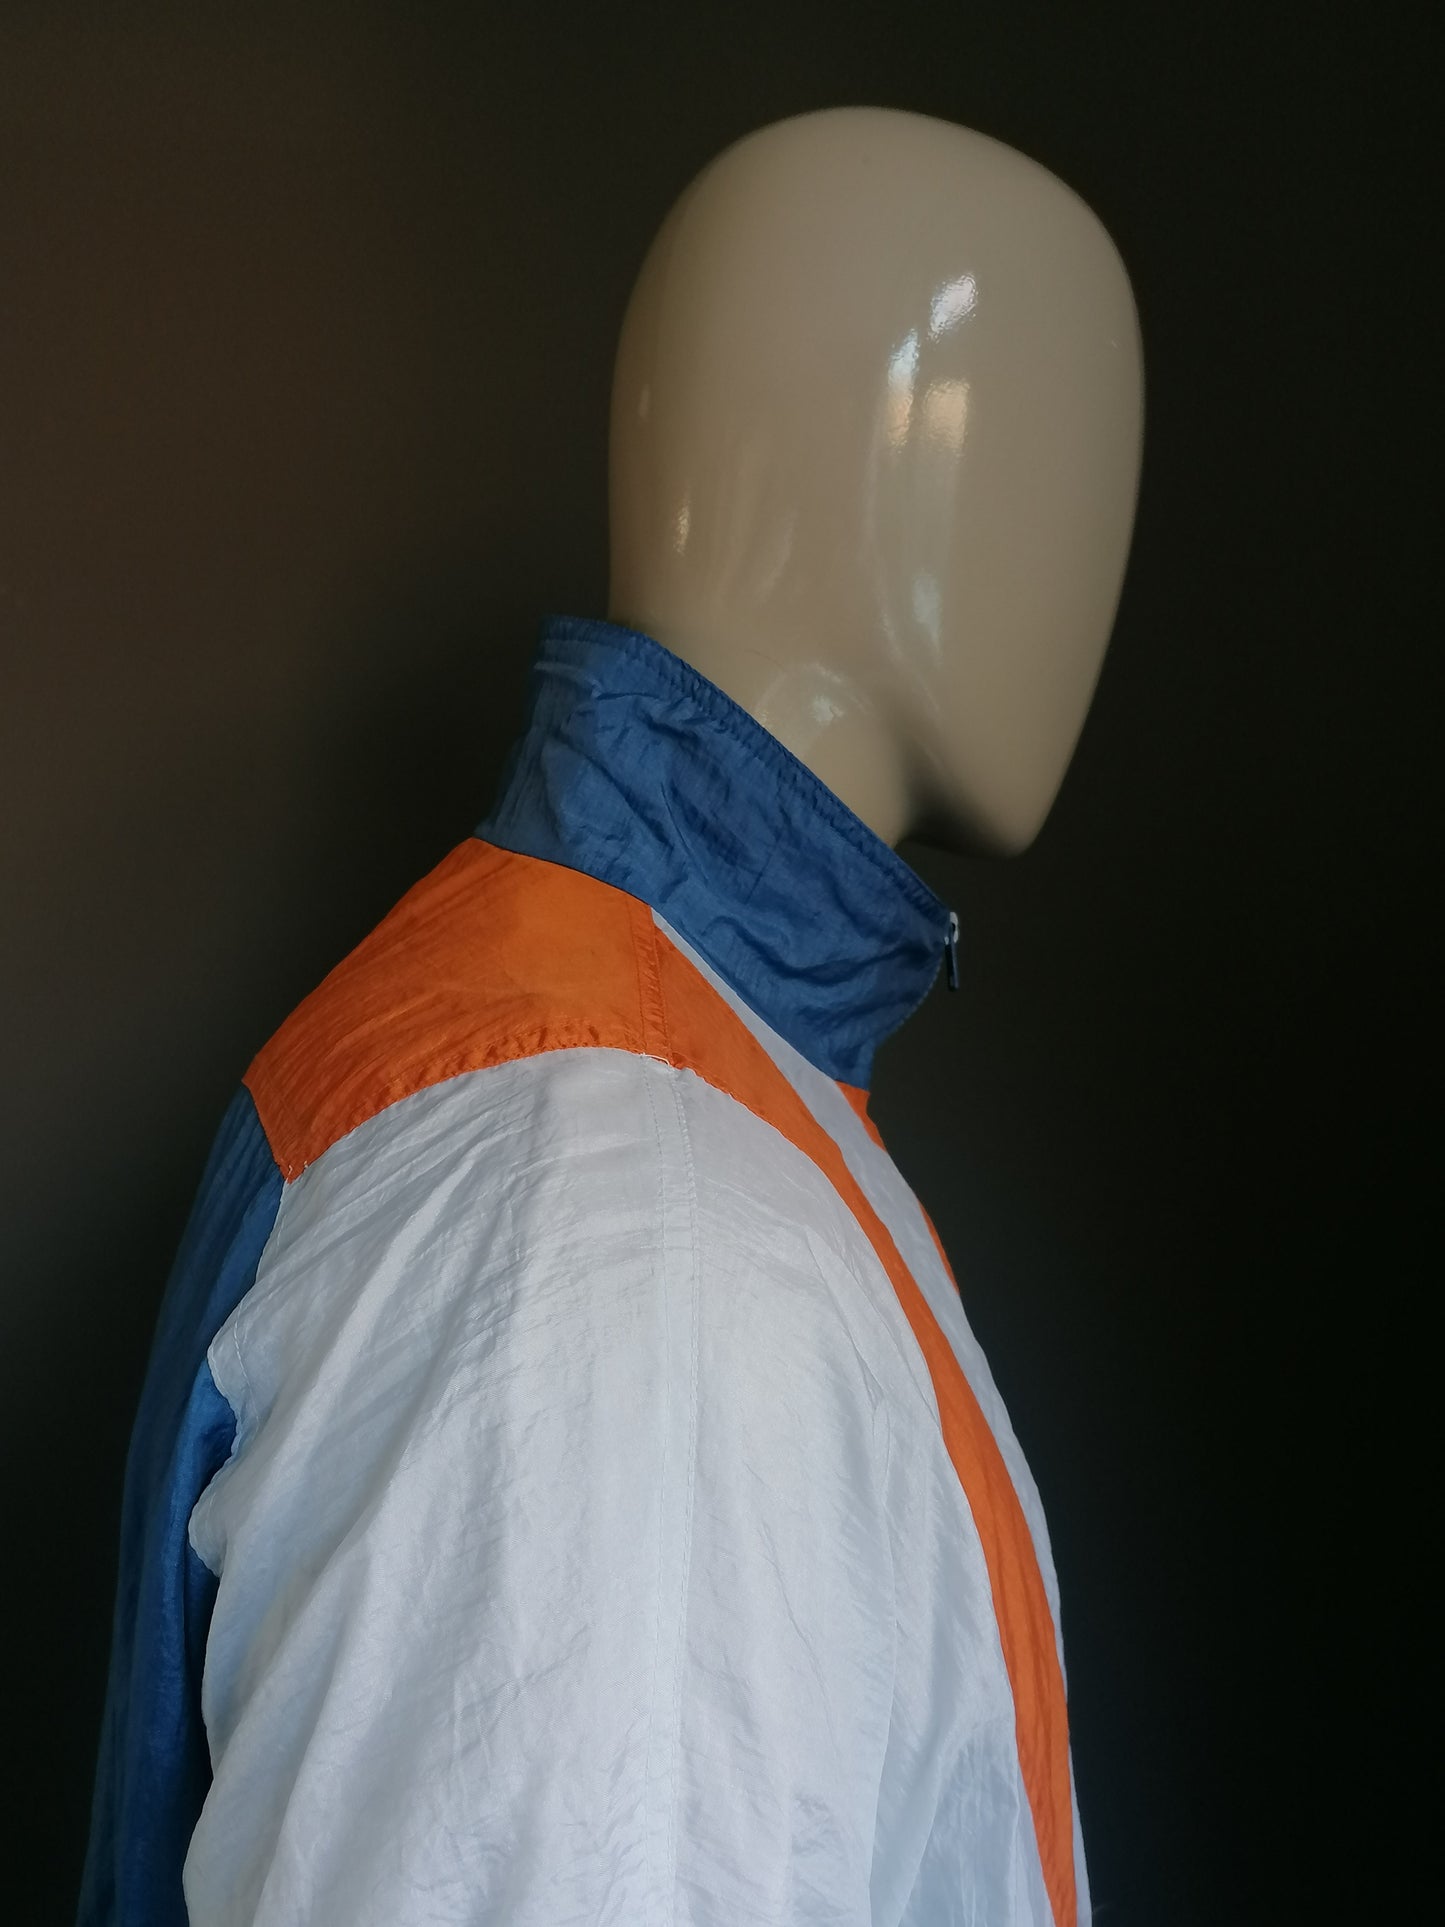 Vintage L.A. Gear  80's-90's trainingsjack!! Oranje Blauw Wit gekleurd. Maat L.